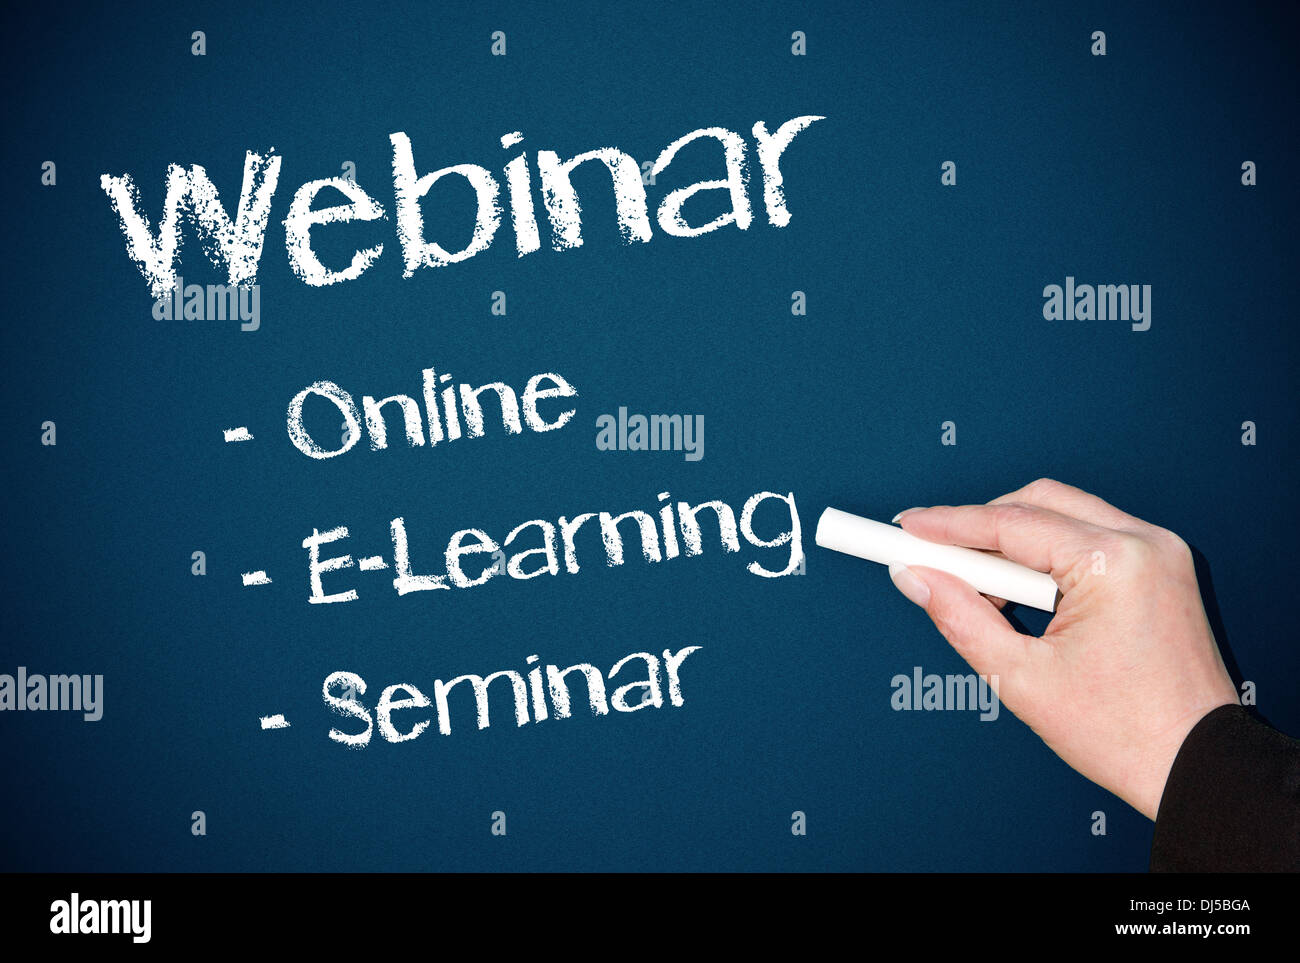 Webinar - Online e-Learning Seminar Stock Photo